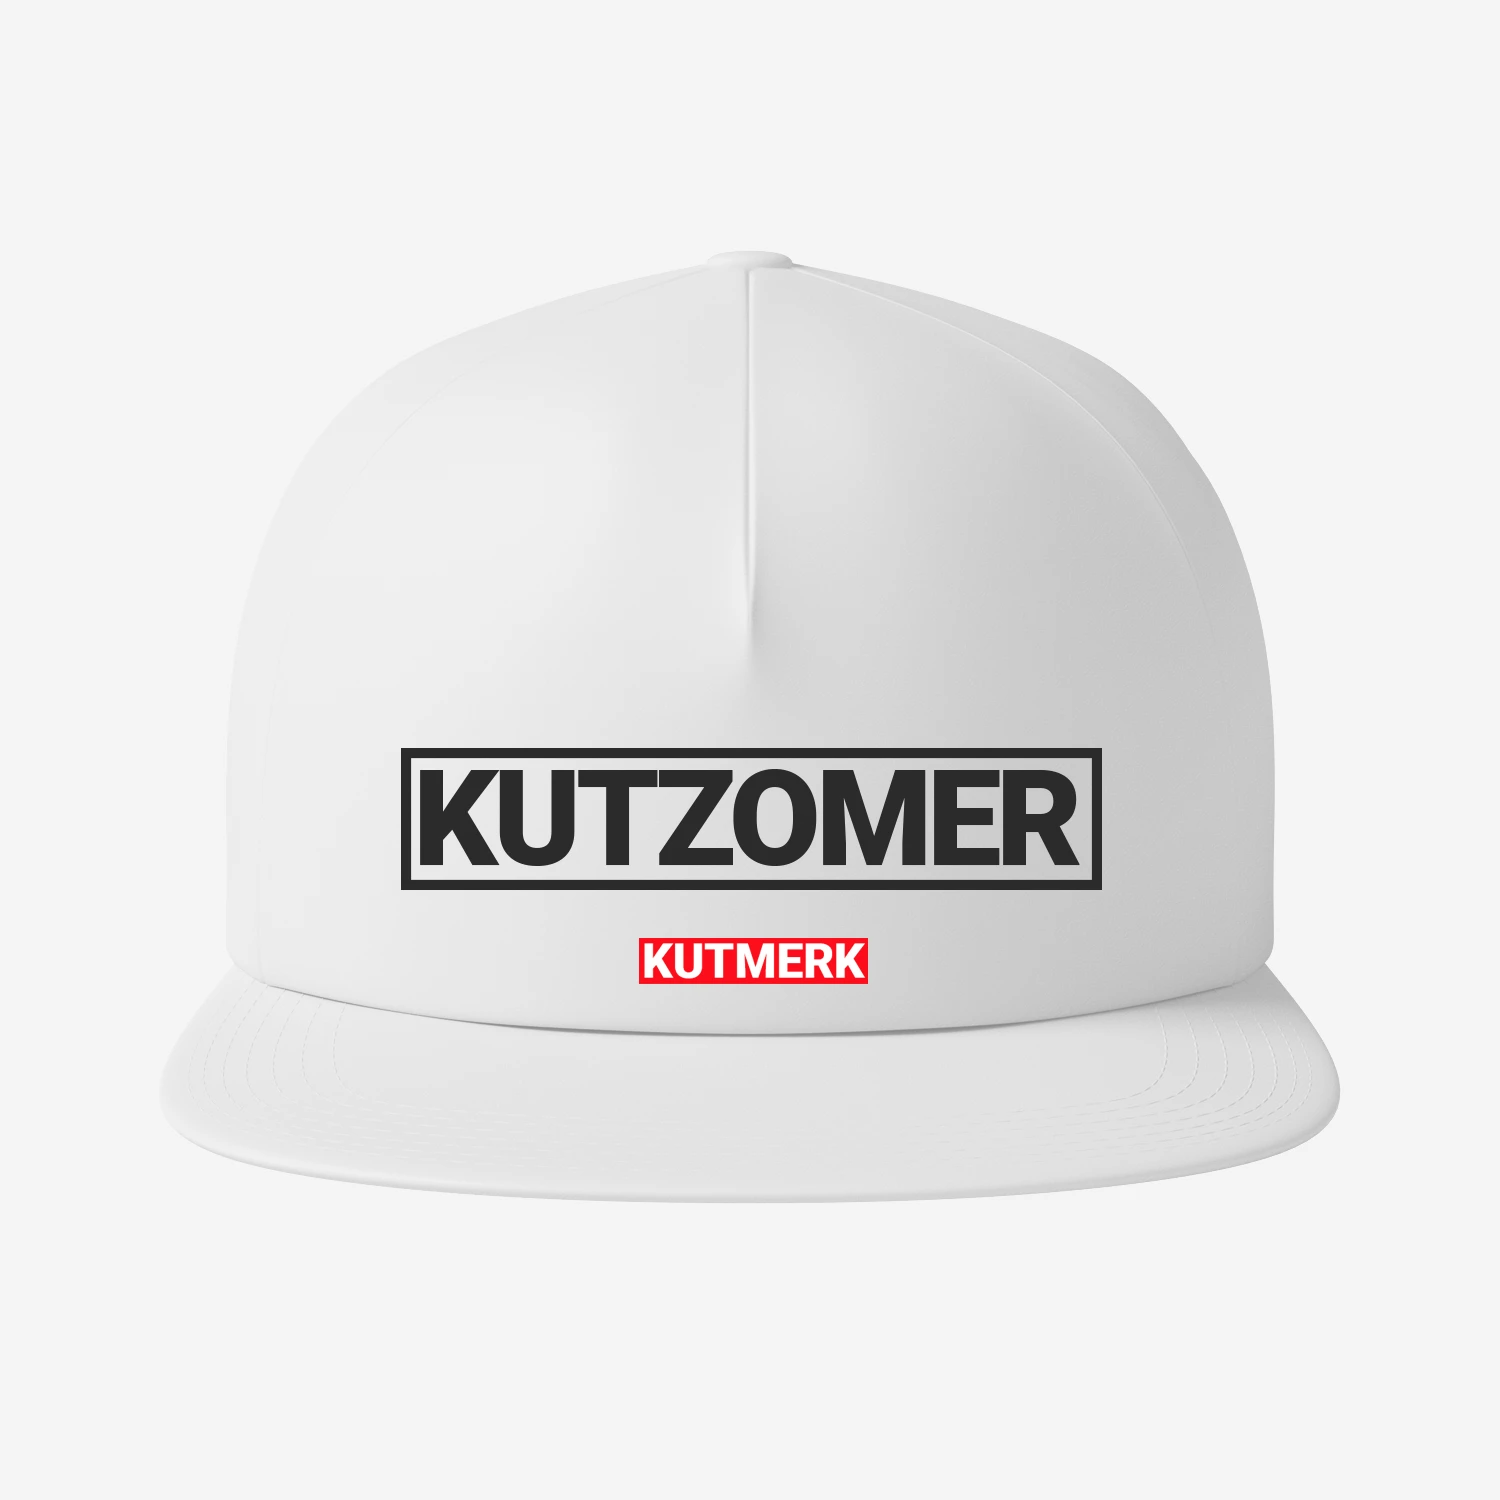 Kutzomer